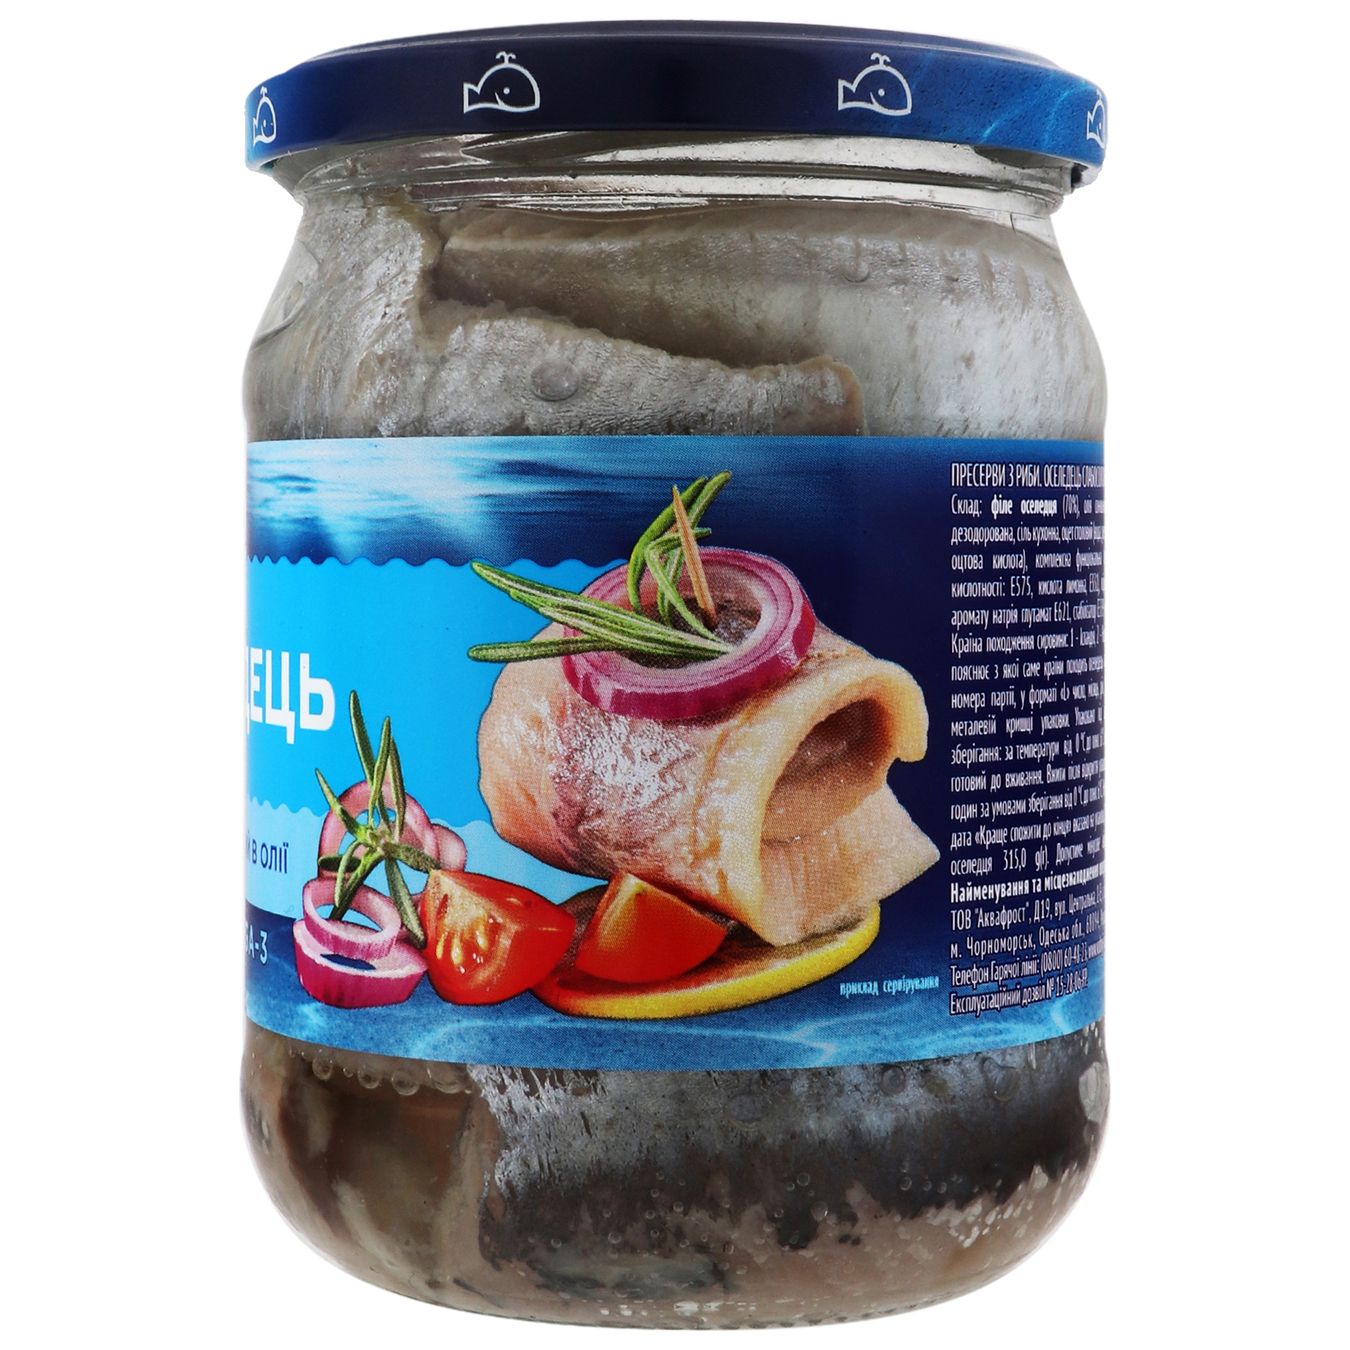 Water World herring slightly salted in oil fillet glass jar 450g 5